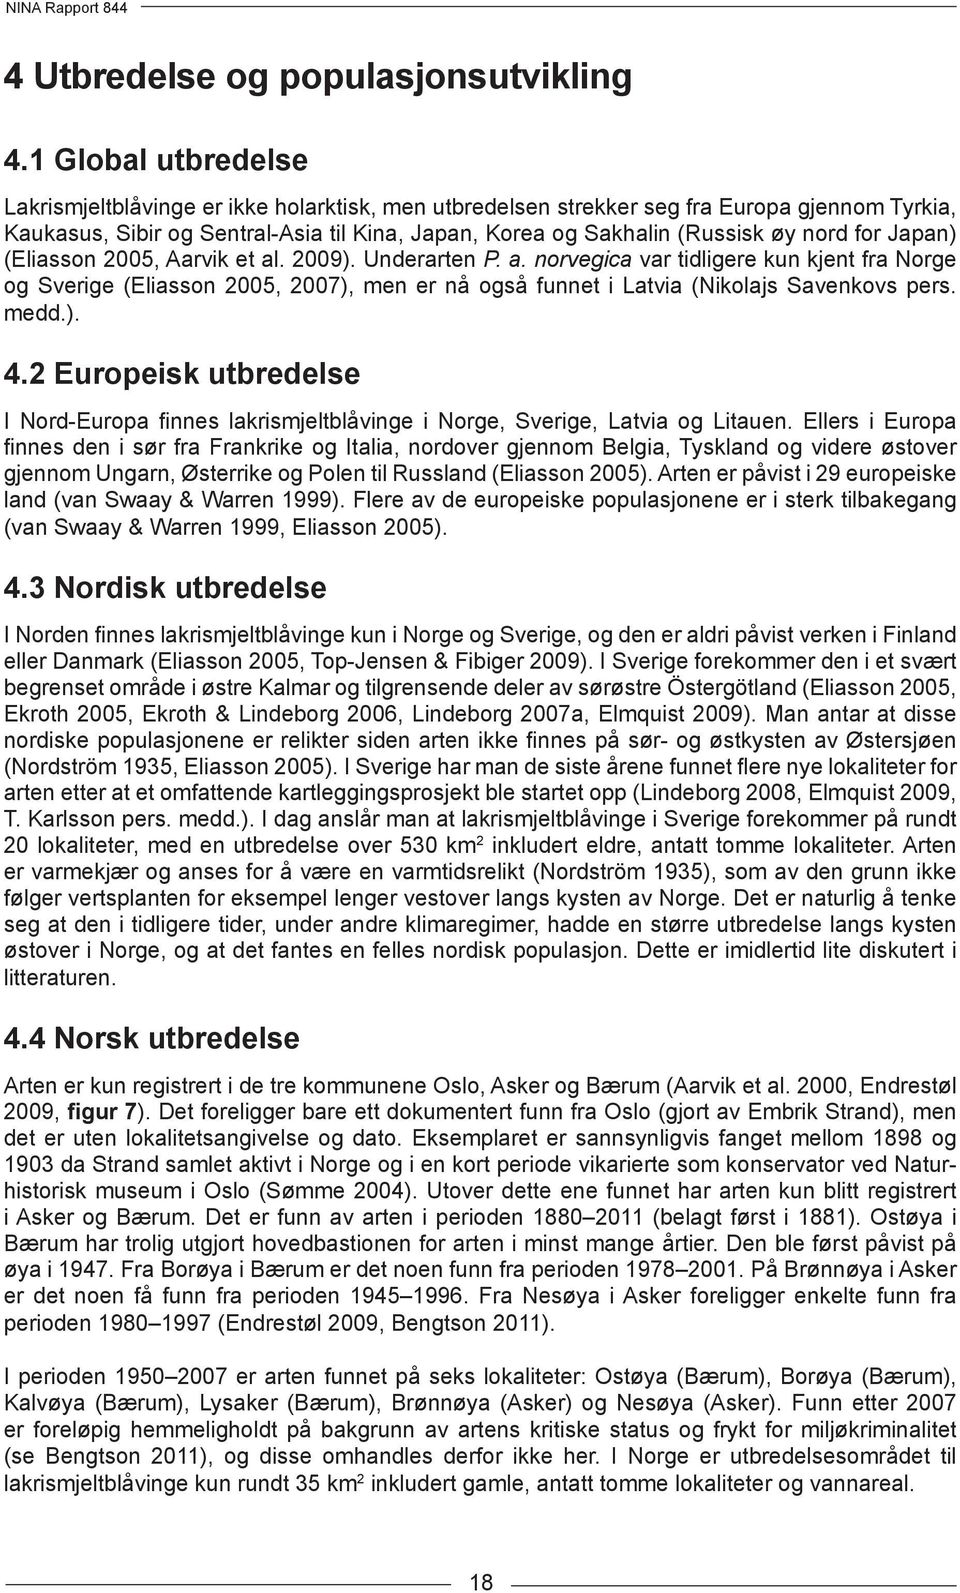 for Japan) (Eliasson 2005, Aarvik et al. 2009). Underarten P. a. norvegica var tidligere kun kjent fra Norge og Sverige (Eliasson 2005, 2007), men er nå også funnet i Latvia (Nikolajs Savenkovs pers.